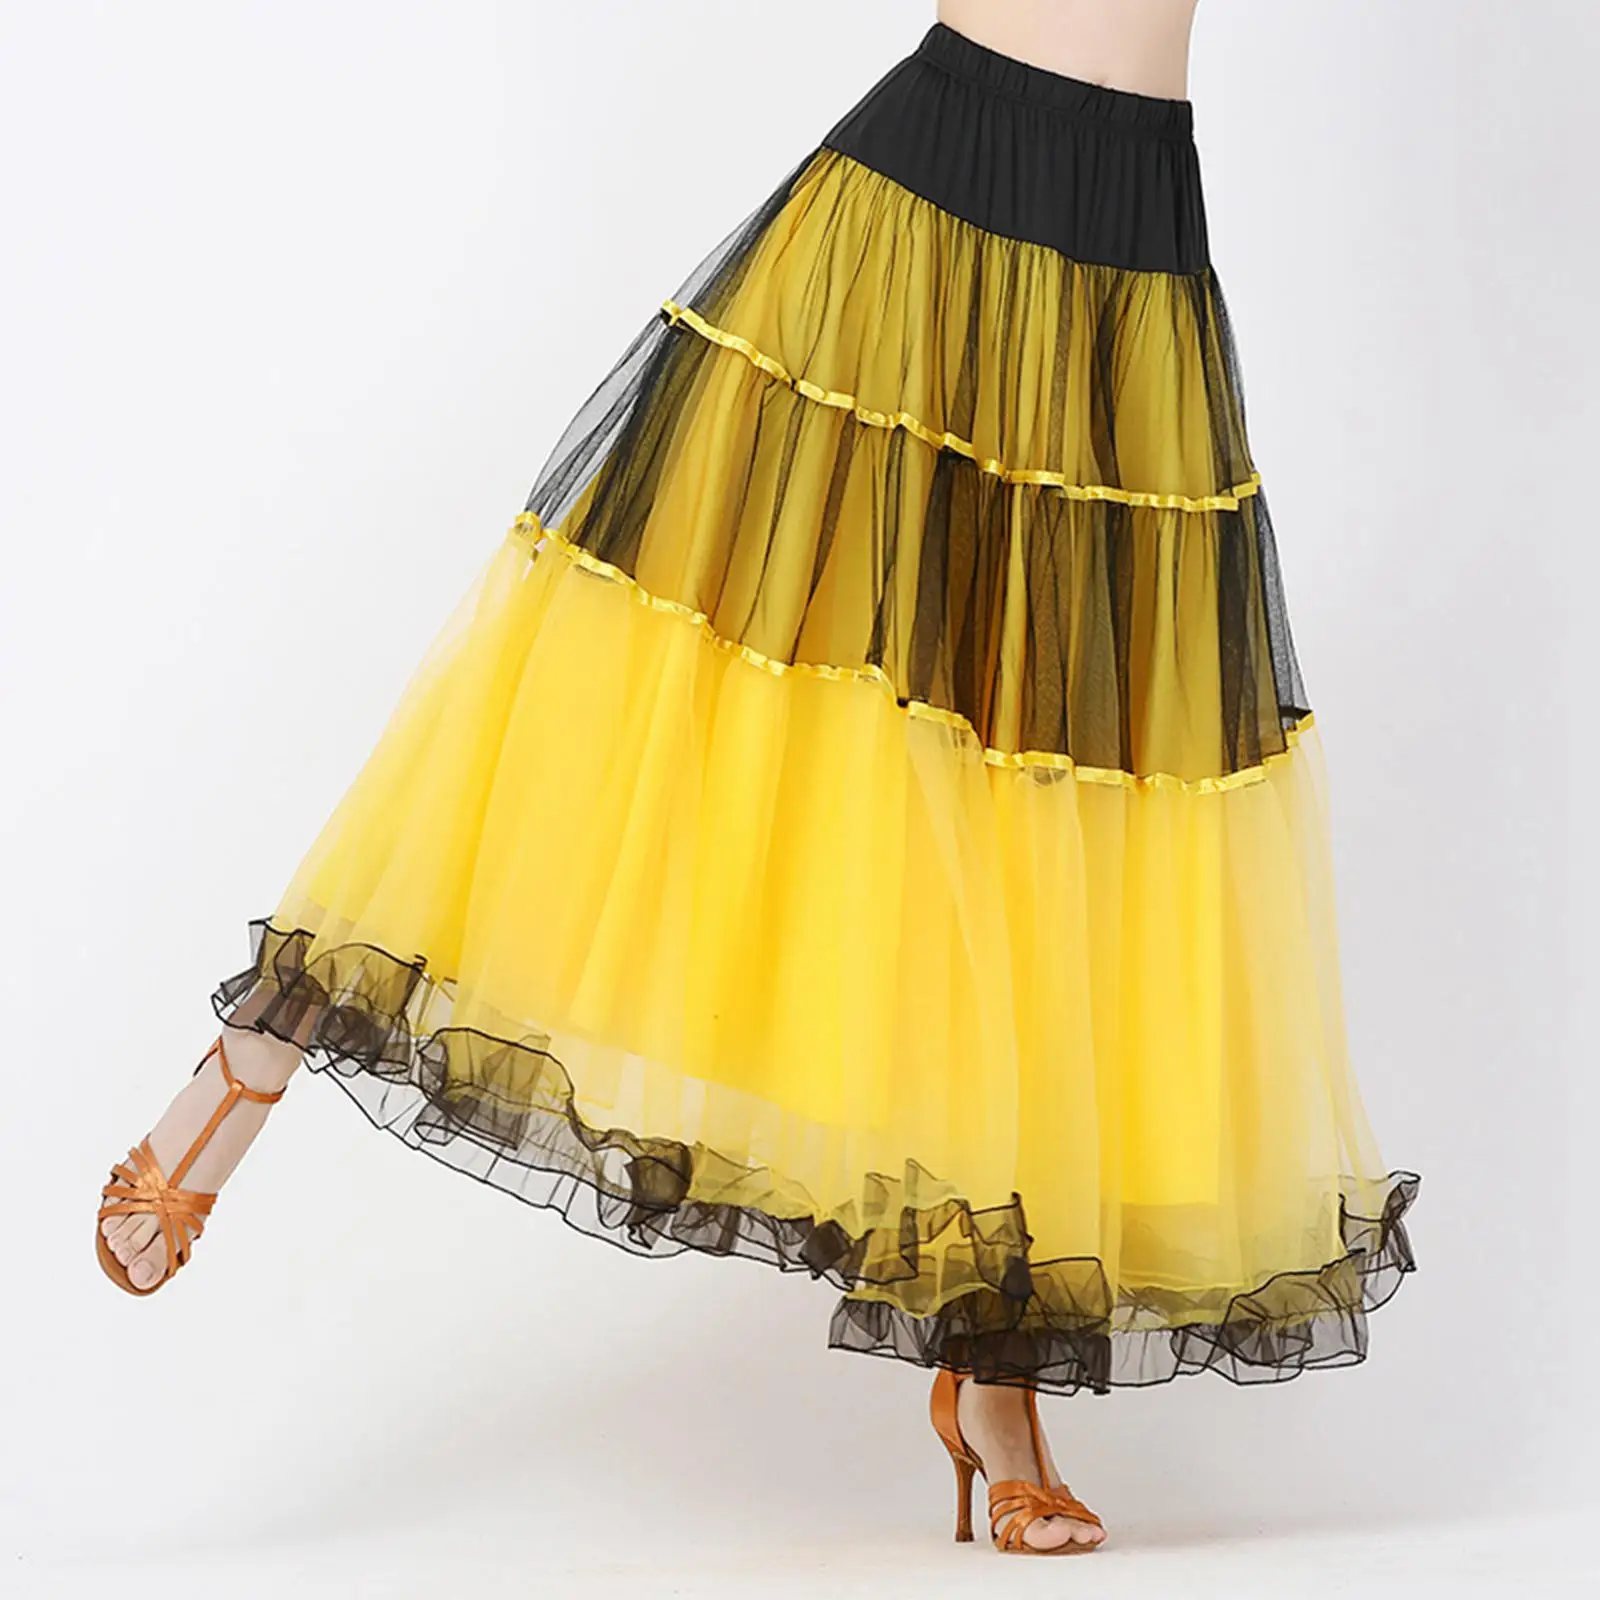 Ballroom Dance Skirts For Women Modern Dance Skirt With Half Length And Big Swing Skirts For Female